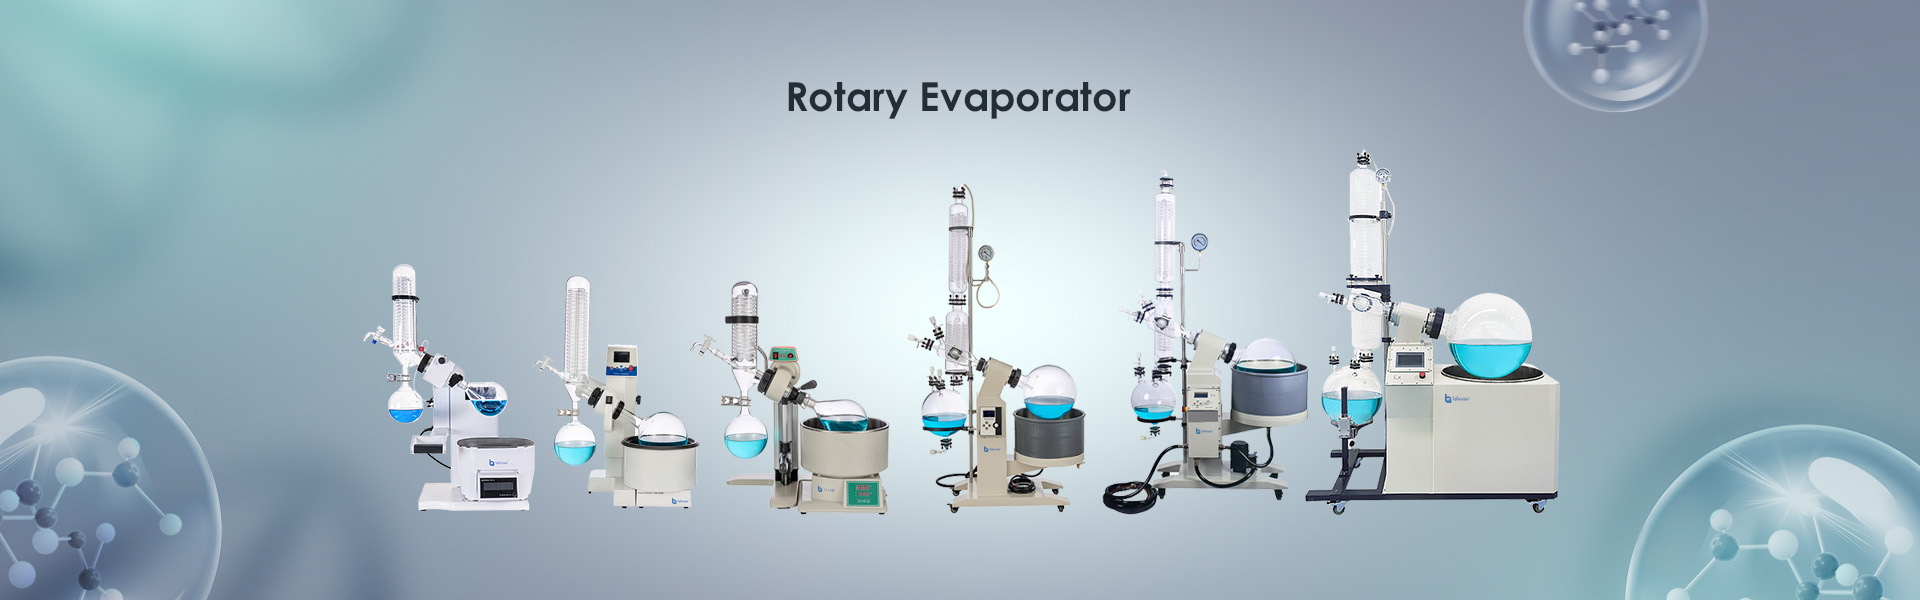 banner of rotary evaporator